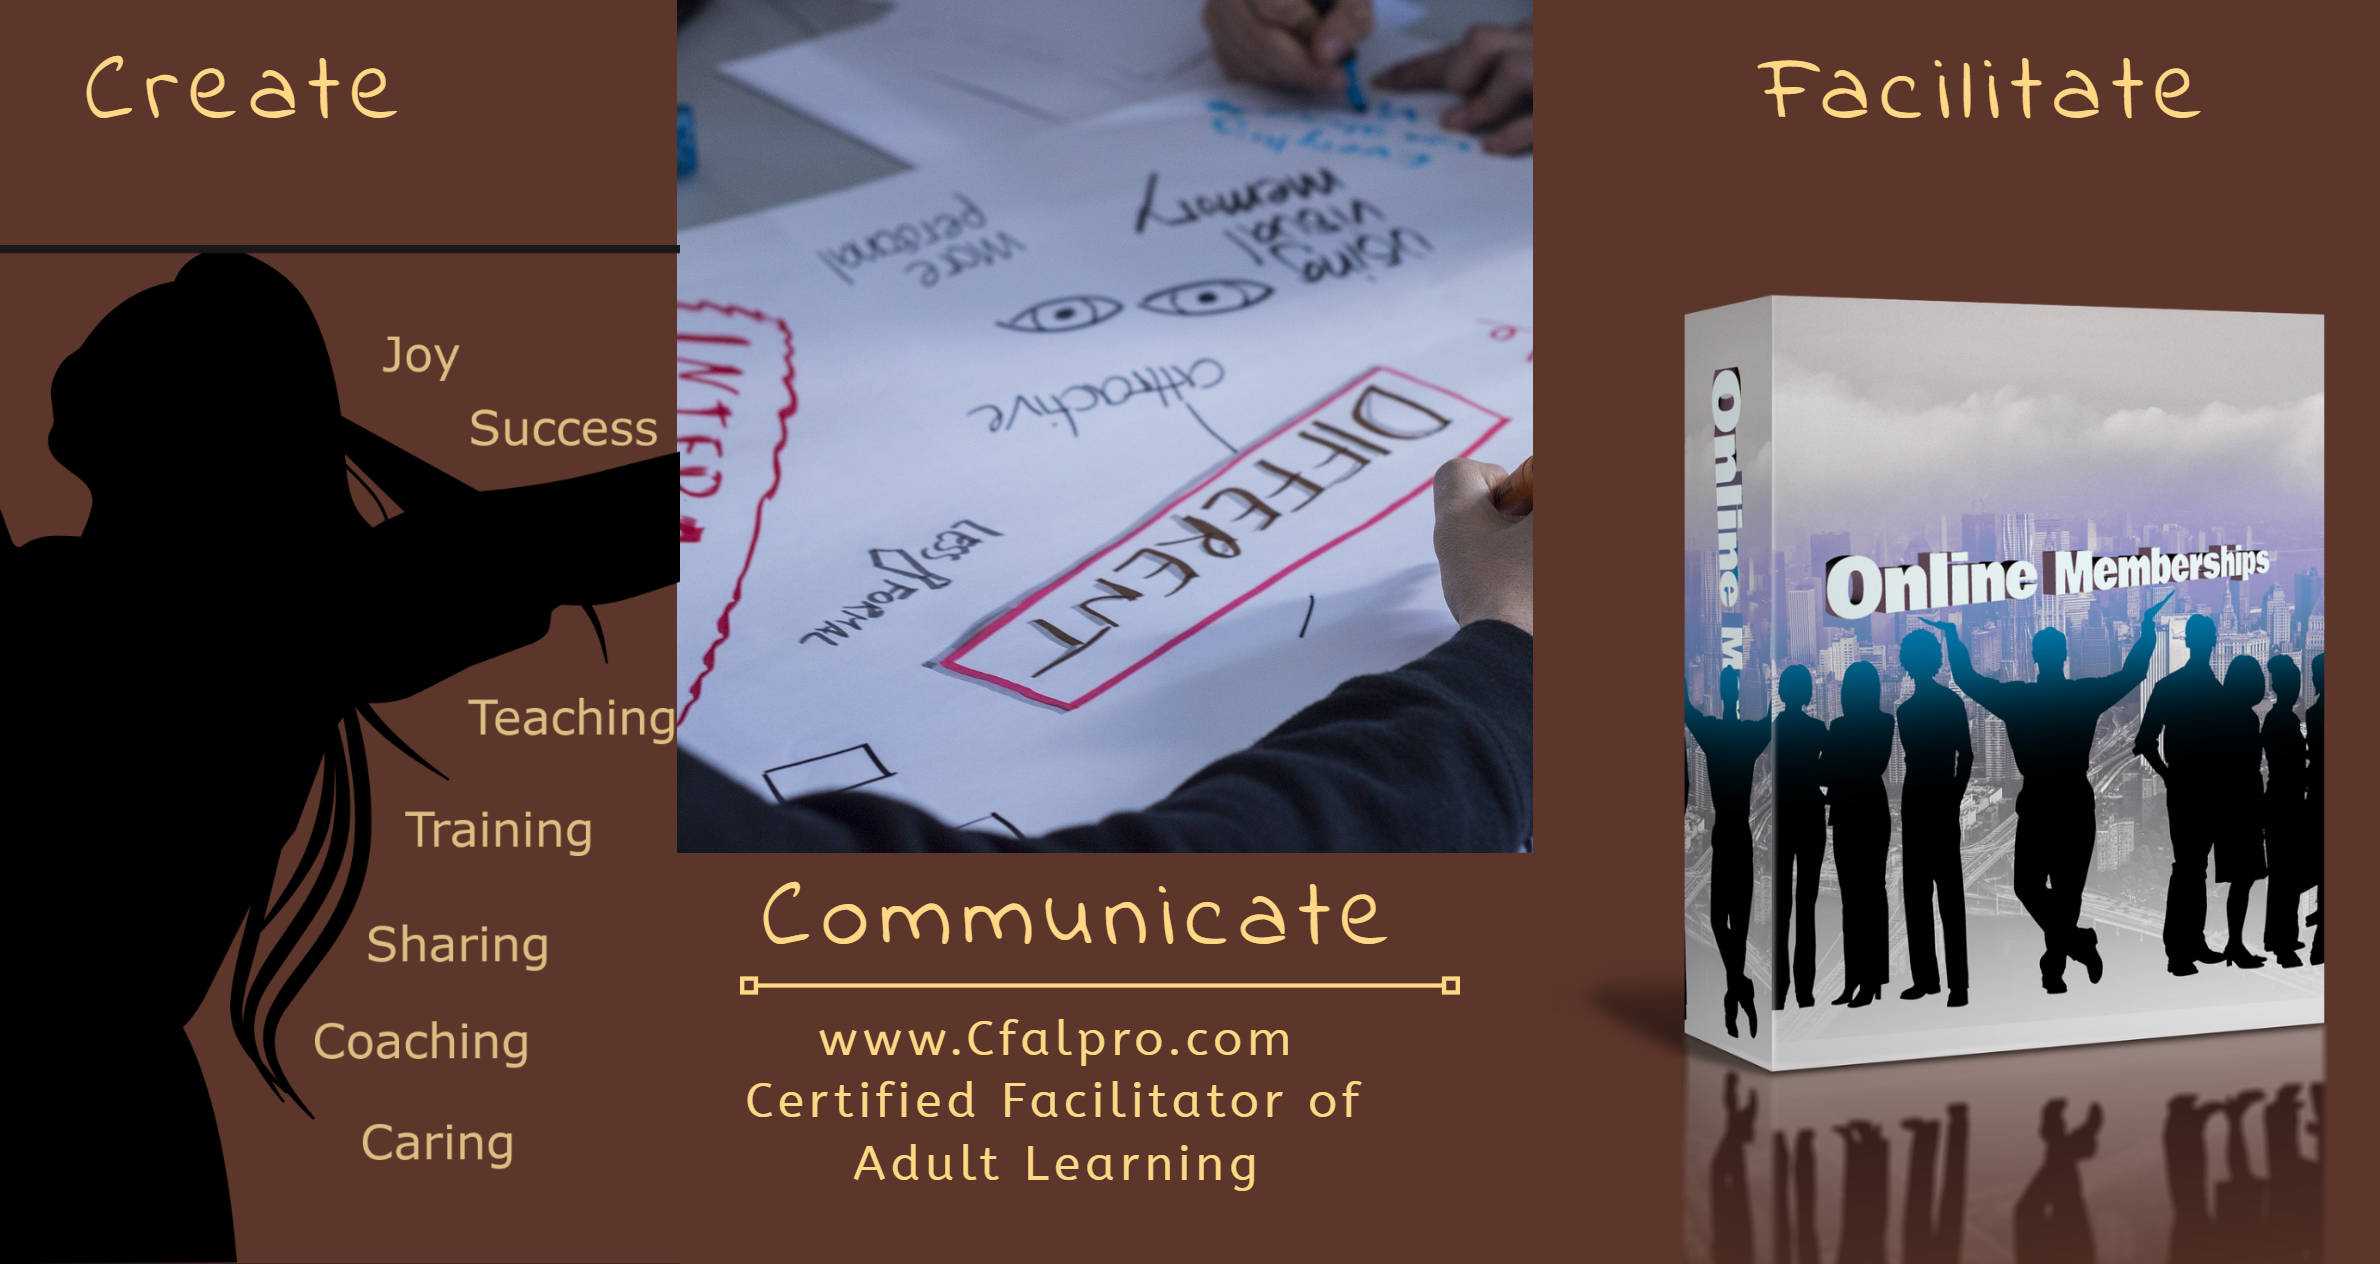 Certified Facilitator of Adult Learning - create, communicate, facilitte